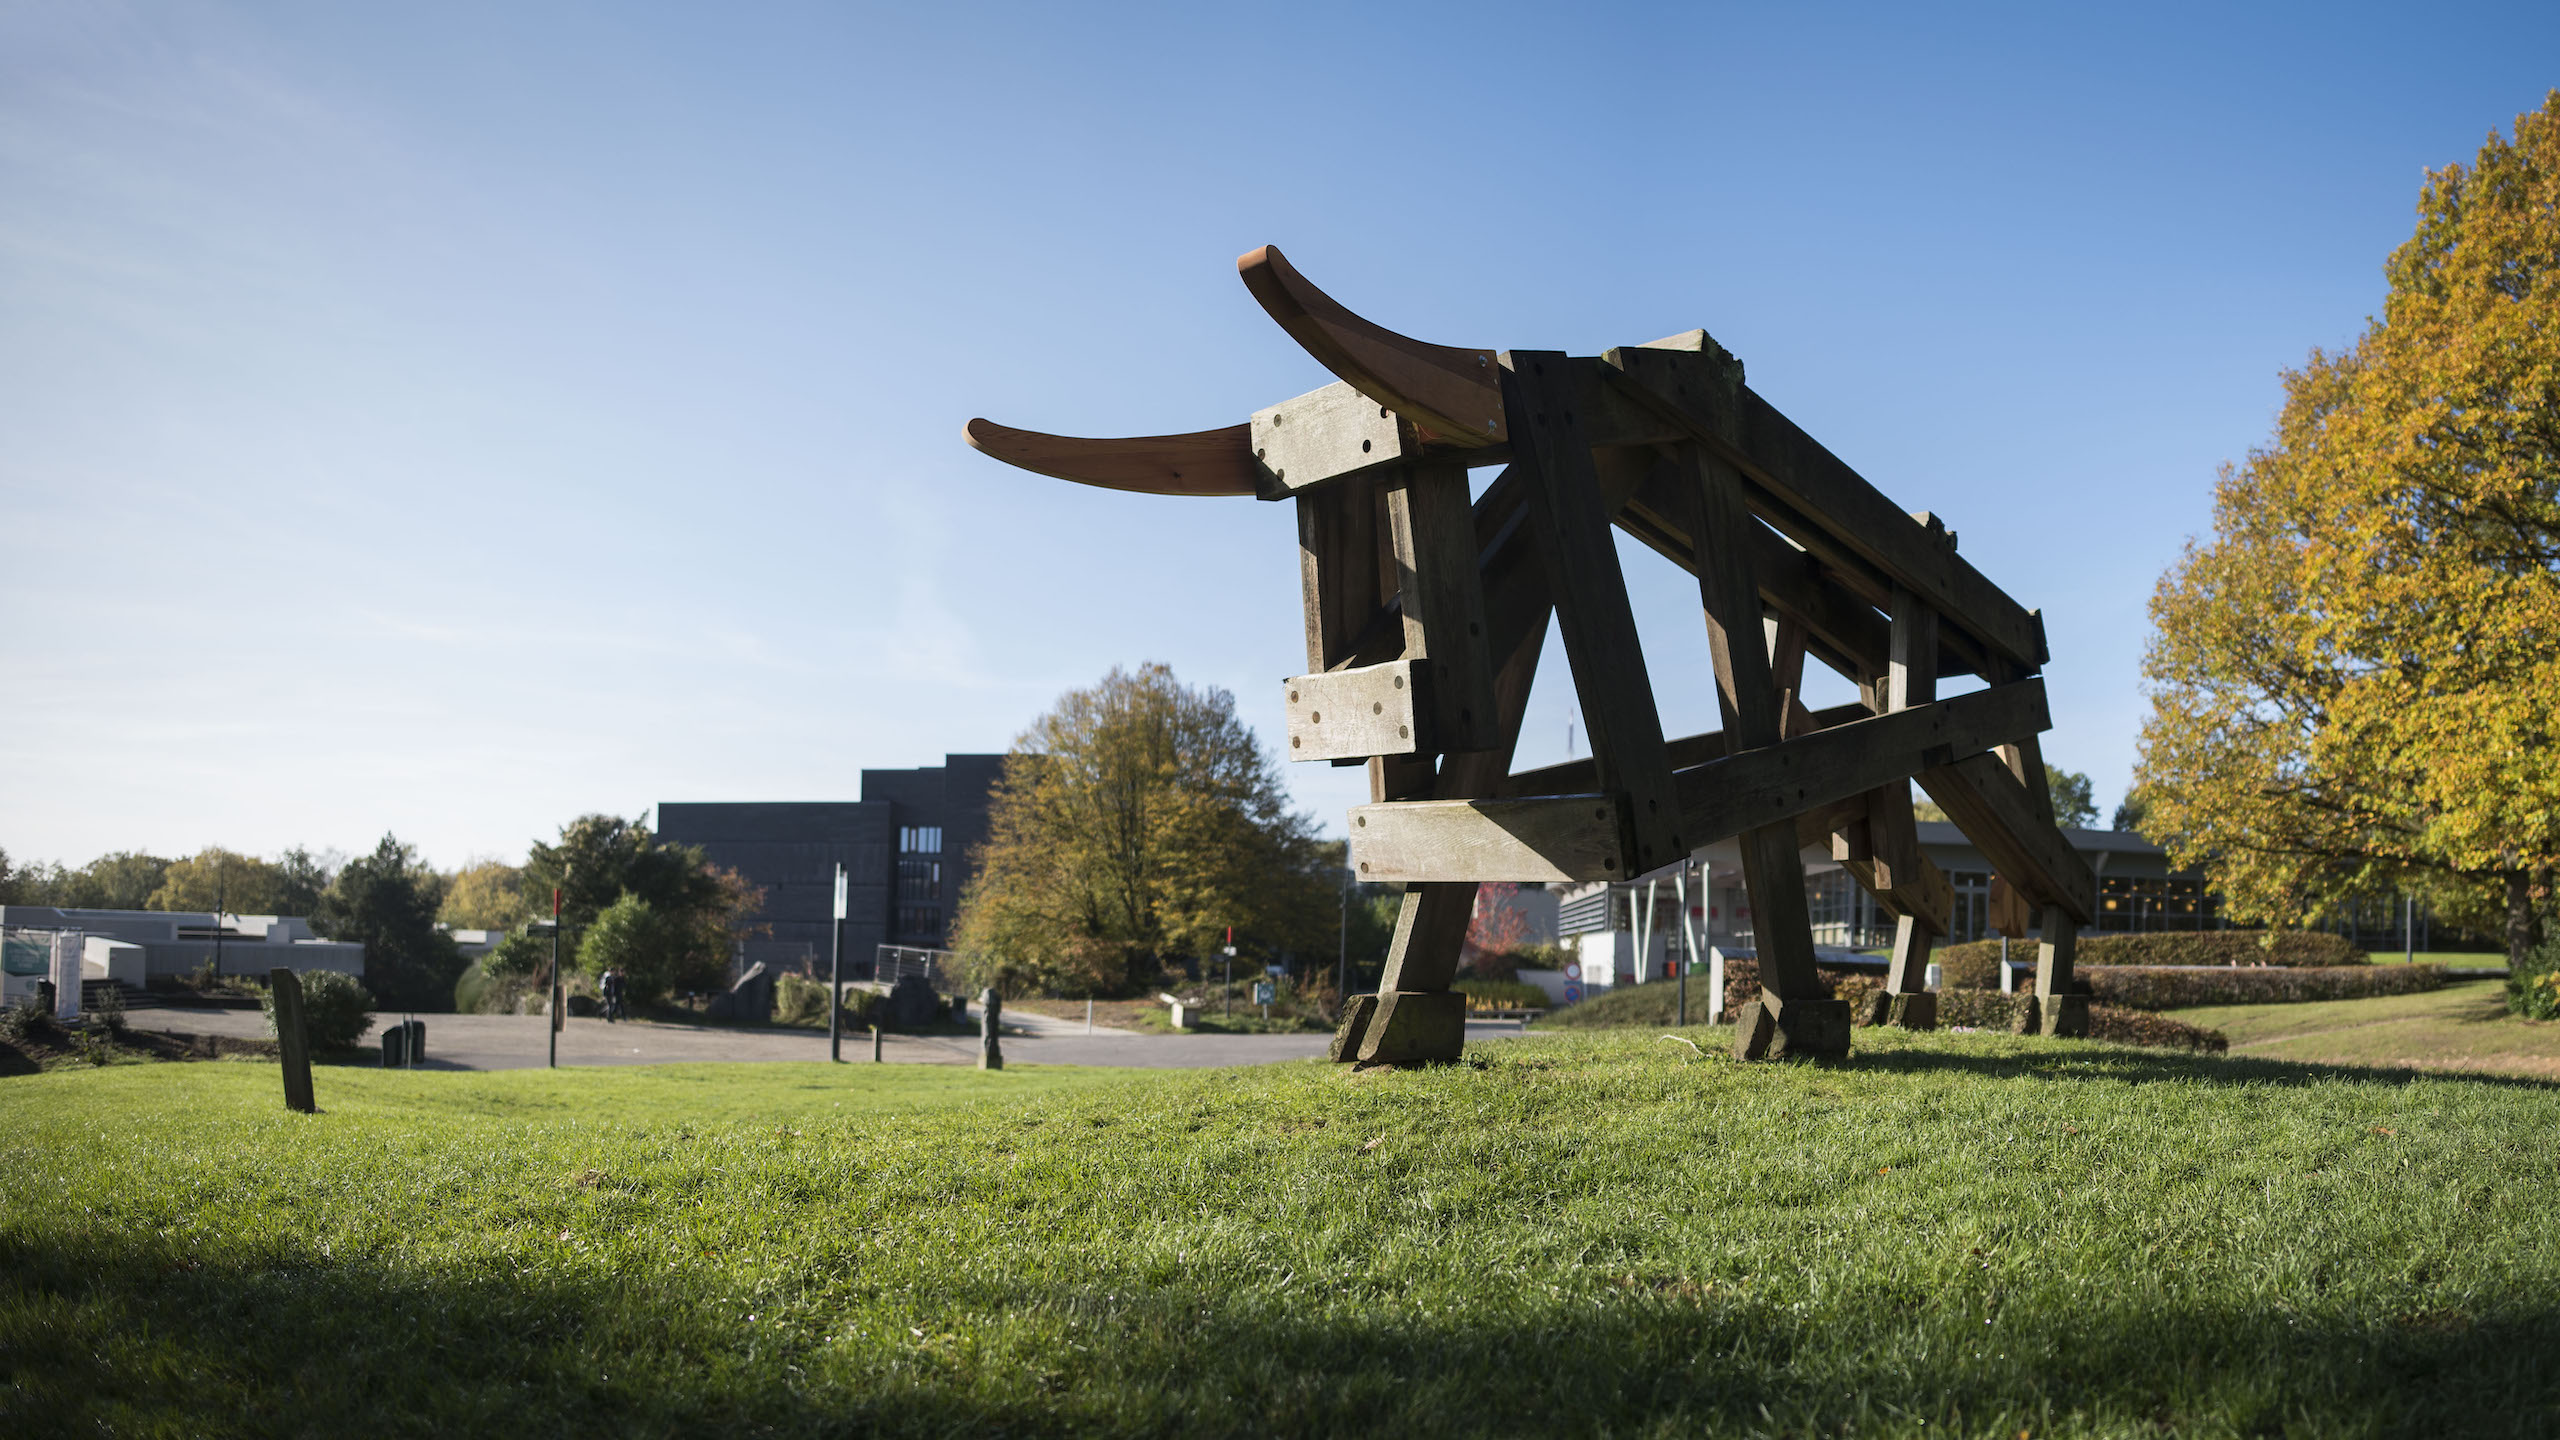 Bull made of wood in Sart Tilman open-air museum